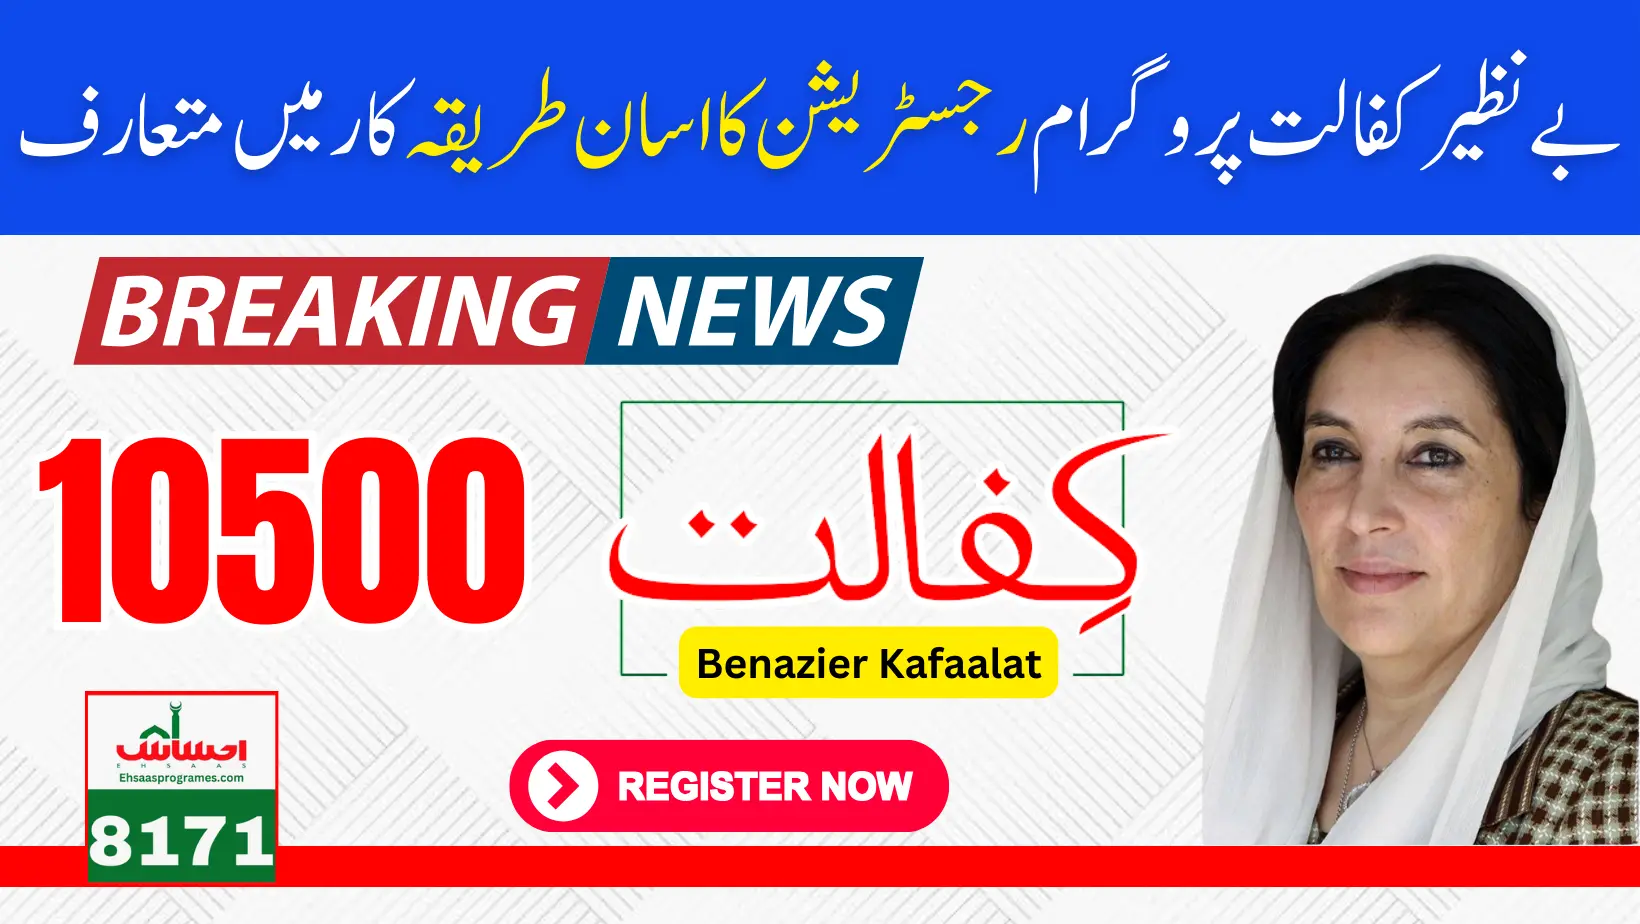 Benazir Kafaalat Complete Method Of Registration For Eligible Female